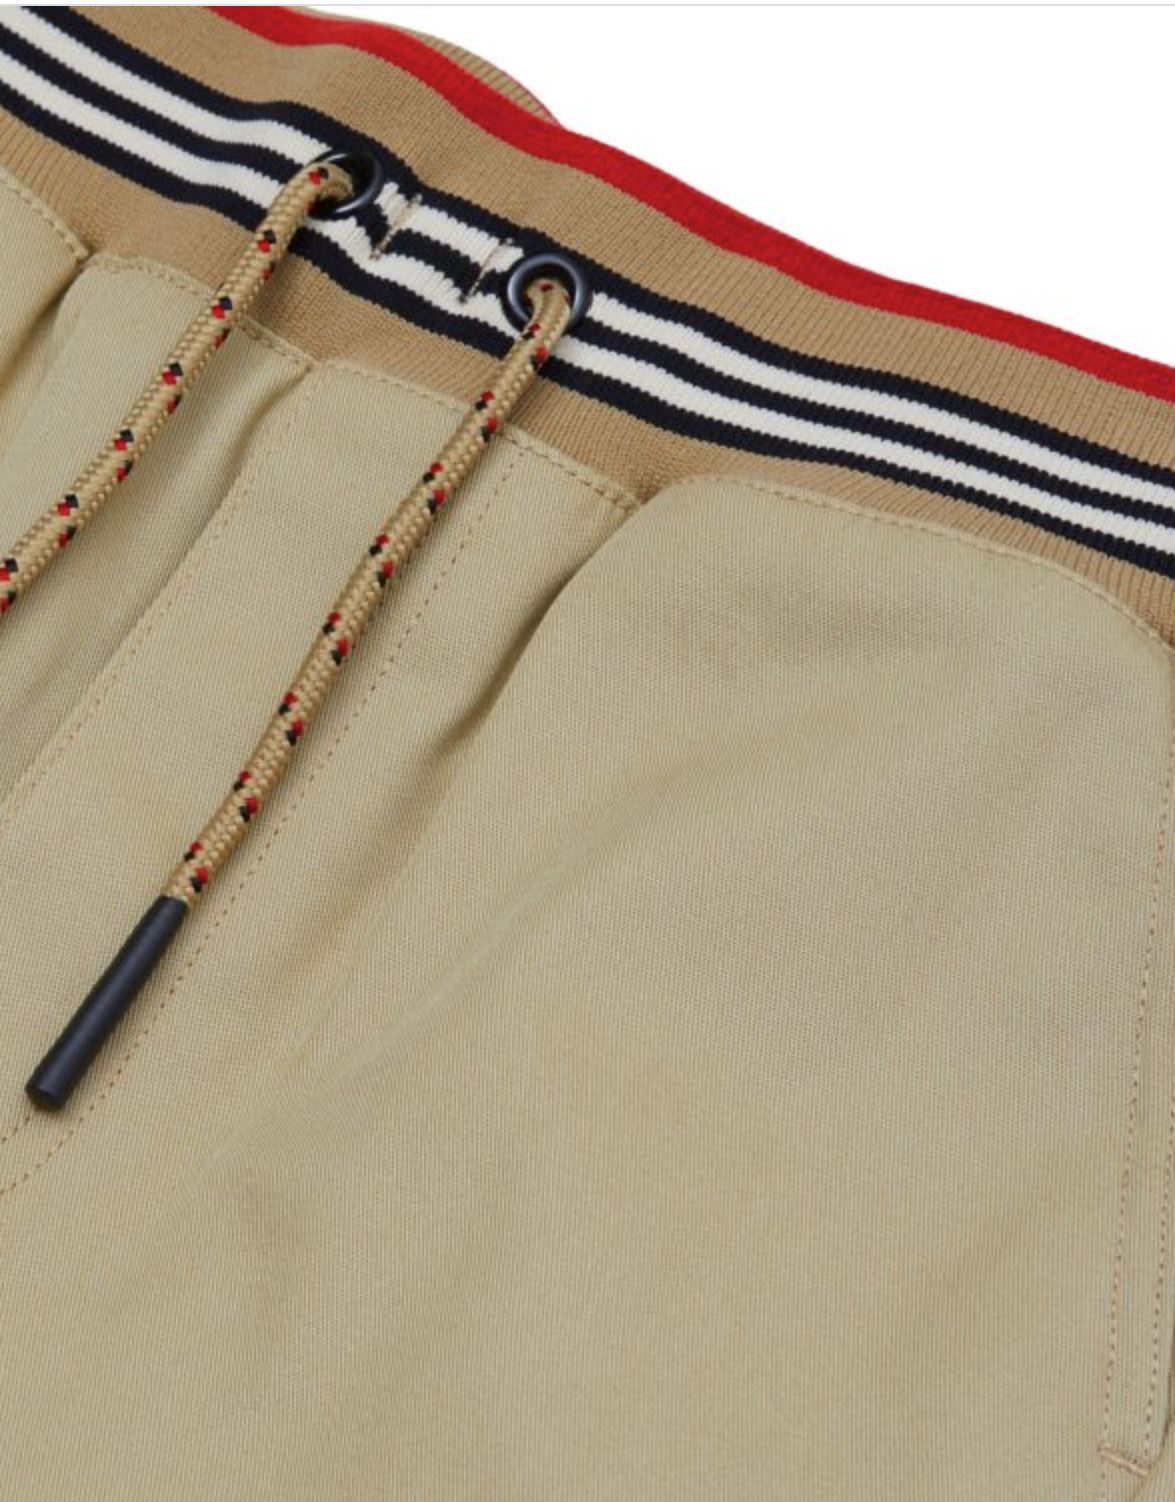 NWT Burberry Boy's Drawstring Pants Beige Size 10